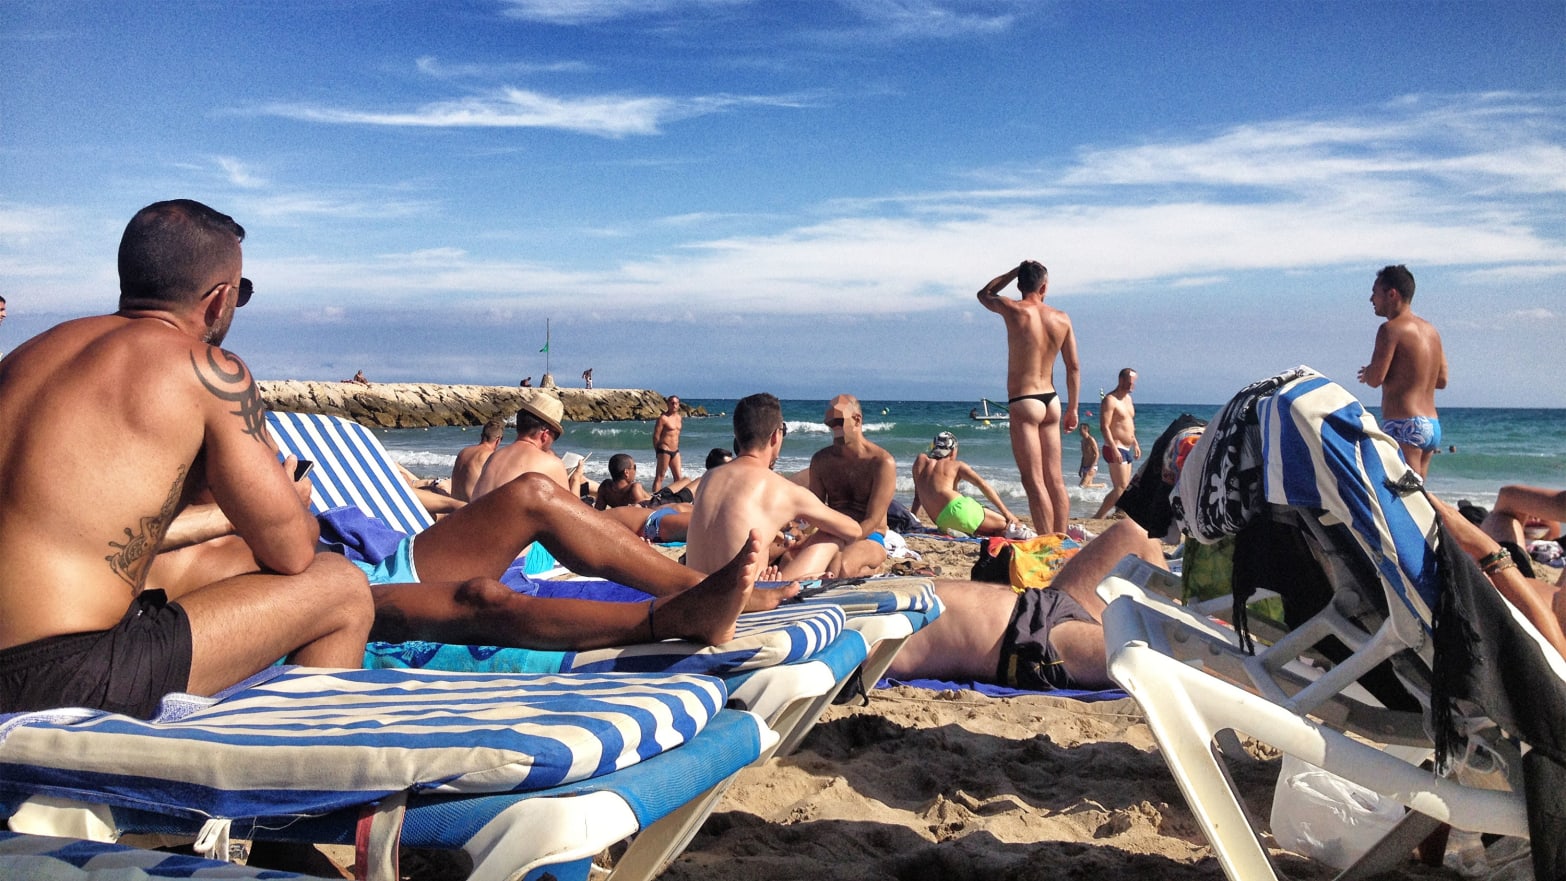 caoimhe dawson recommends black guy nude beach pic